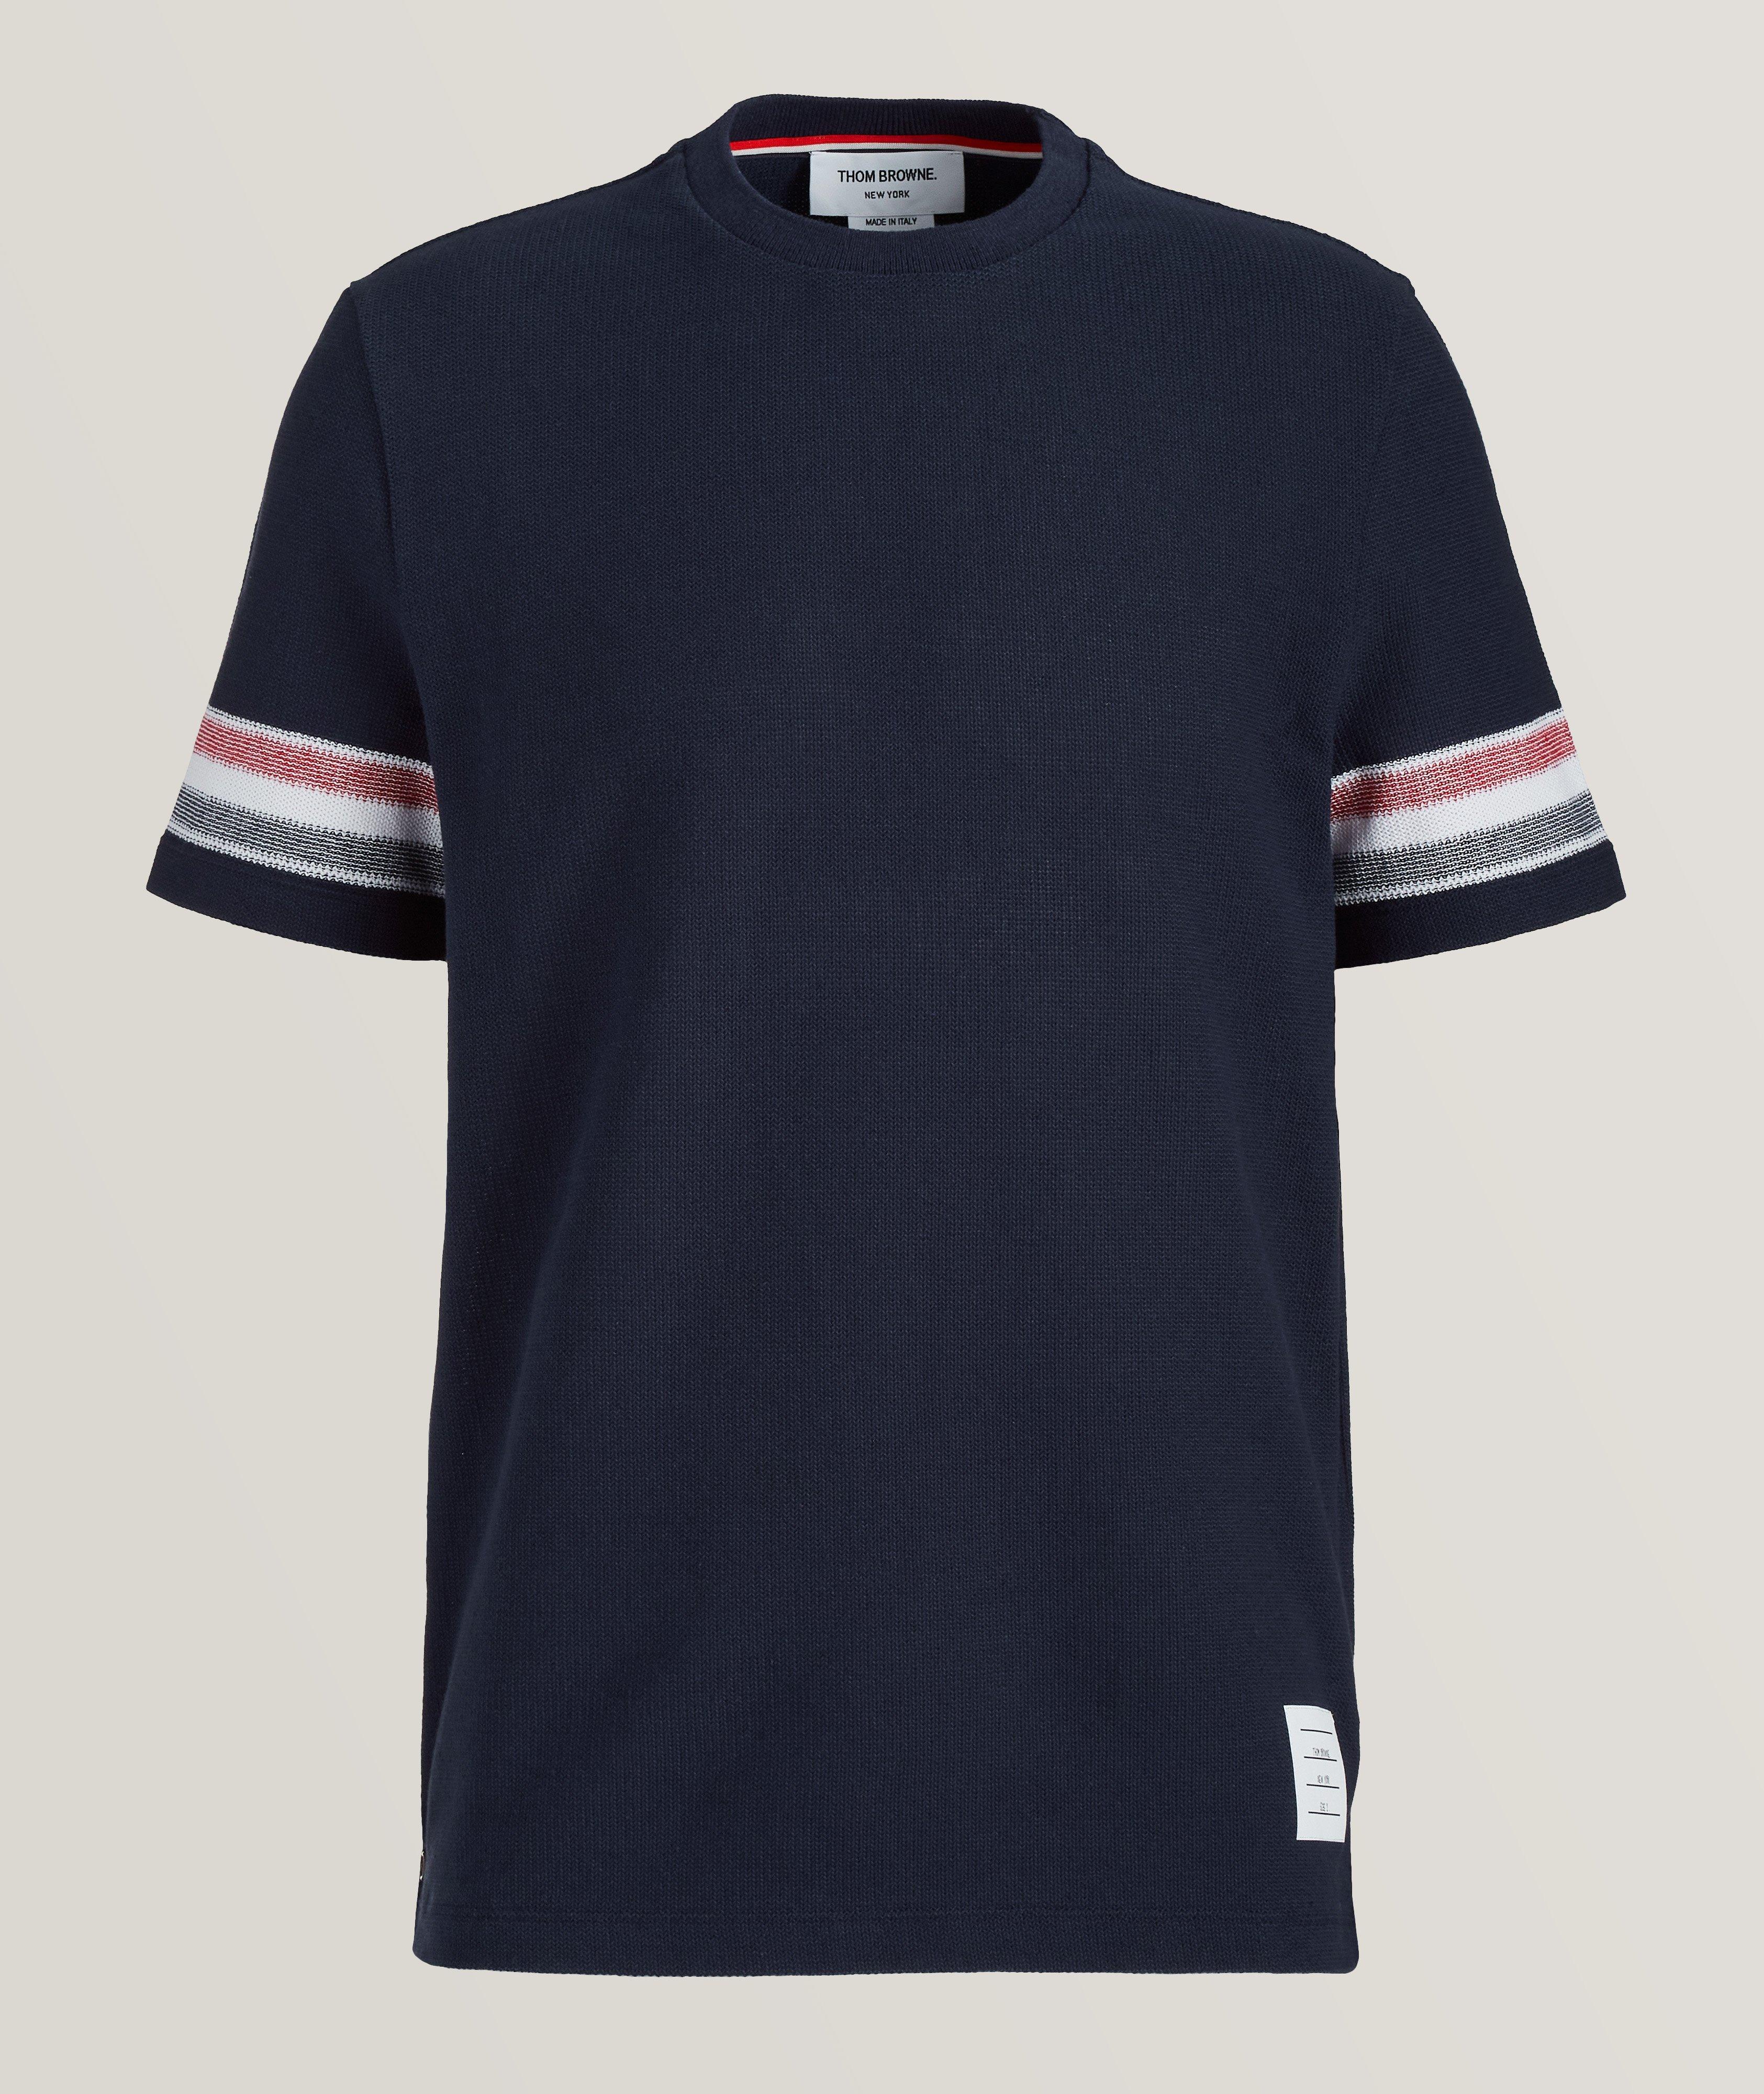 Textured Stripe Cotton Short Sleeve T-Shirt image 0